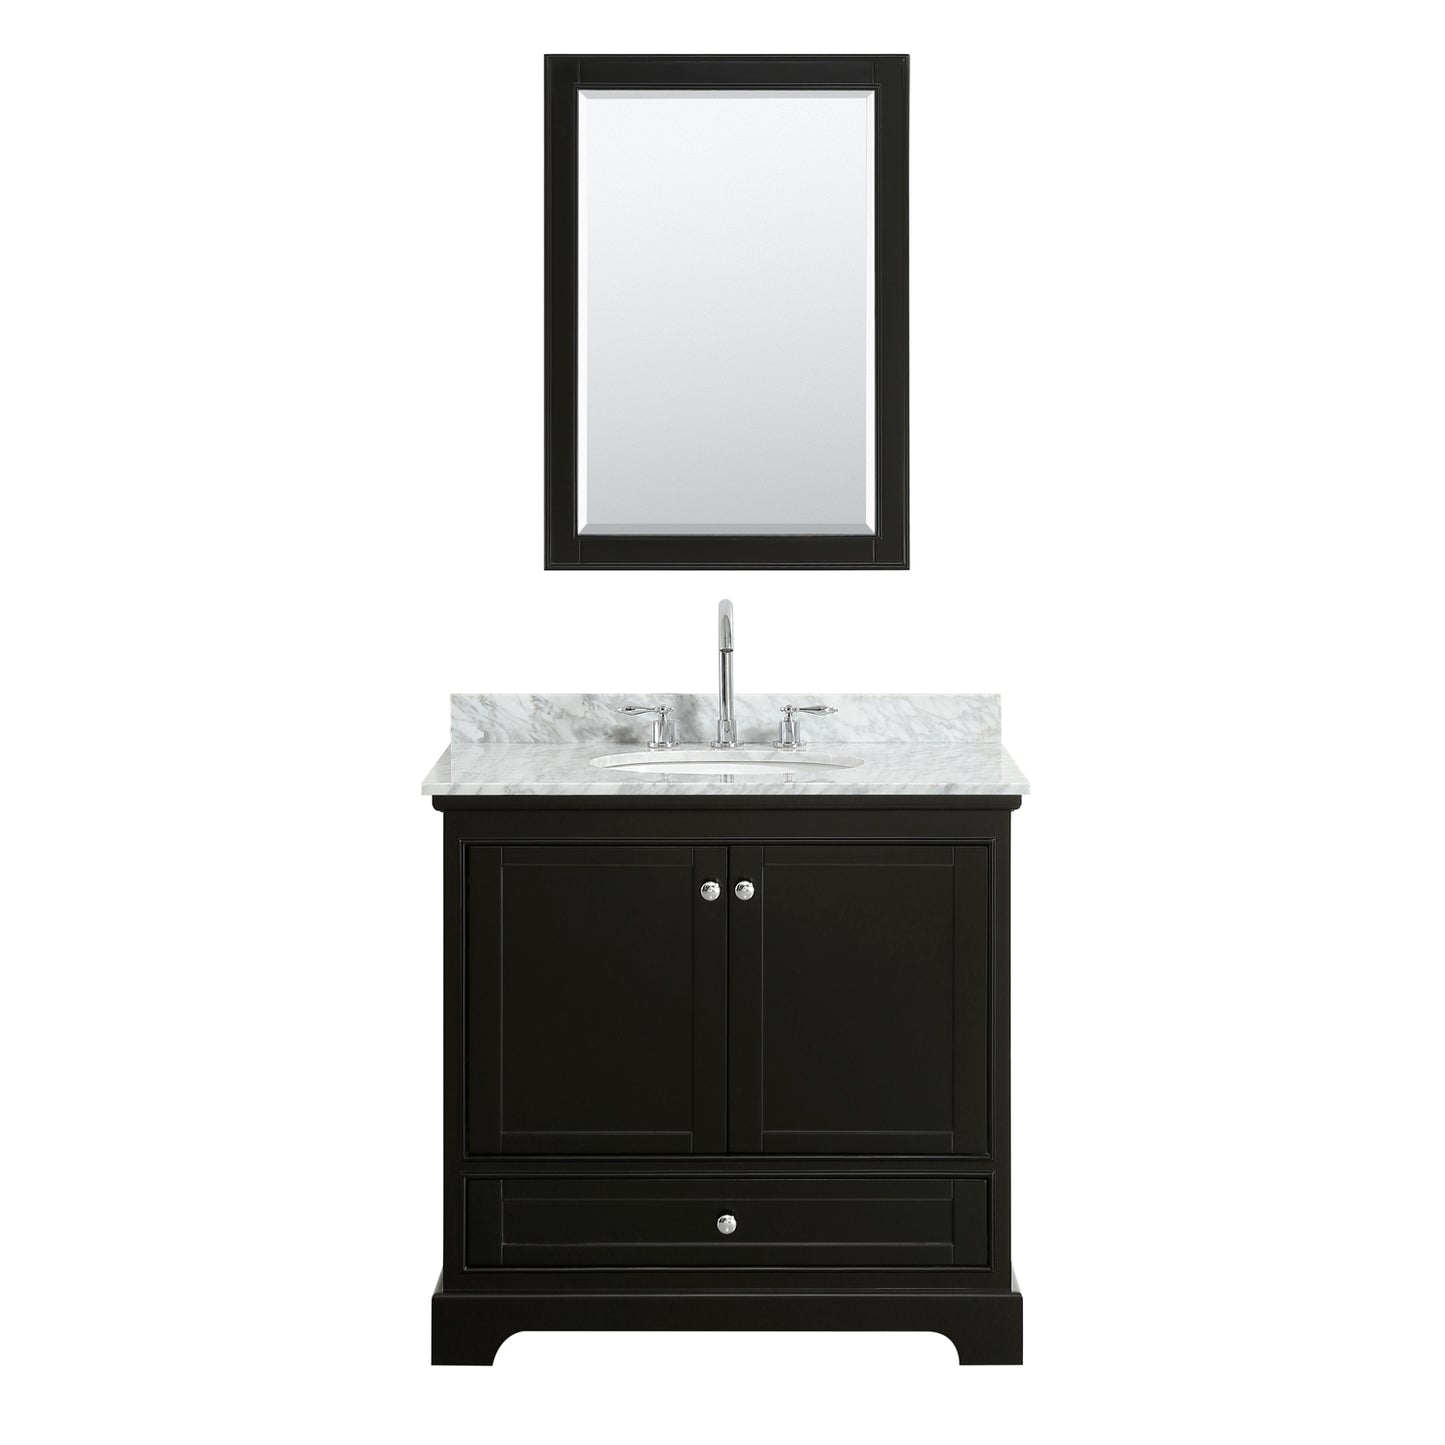 36 Inch Single Bathroom Vanity, White Carrara Marble Countertop, Undermount Oval Sink, and Medicine Cabinet - Luxe Bathroom Vanities Luxury Bathroom Fixtures Bathroom Furniture